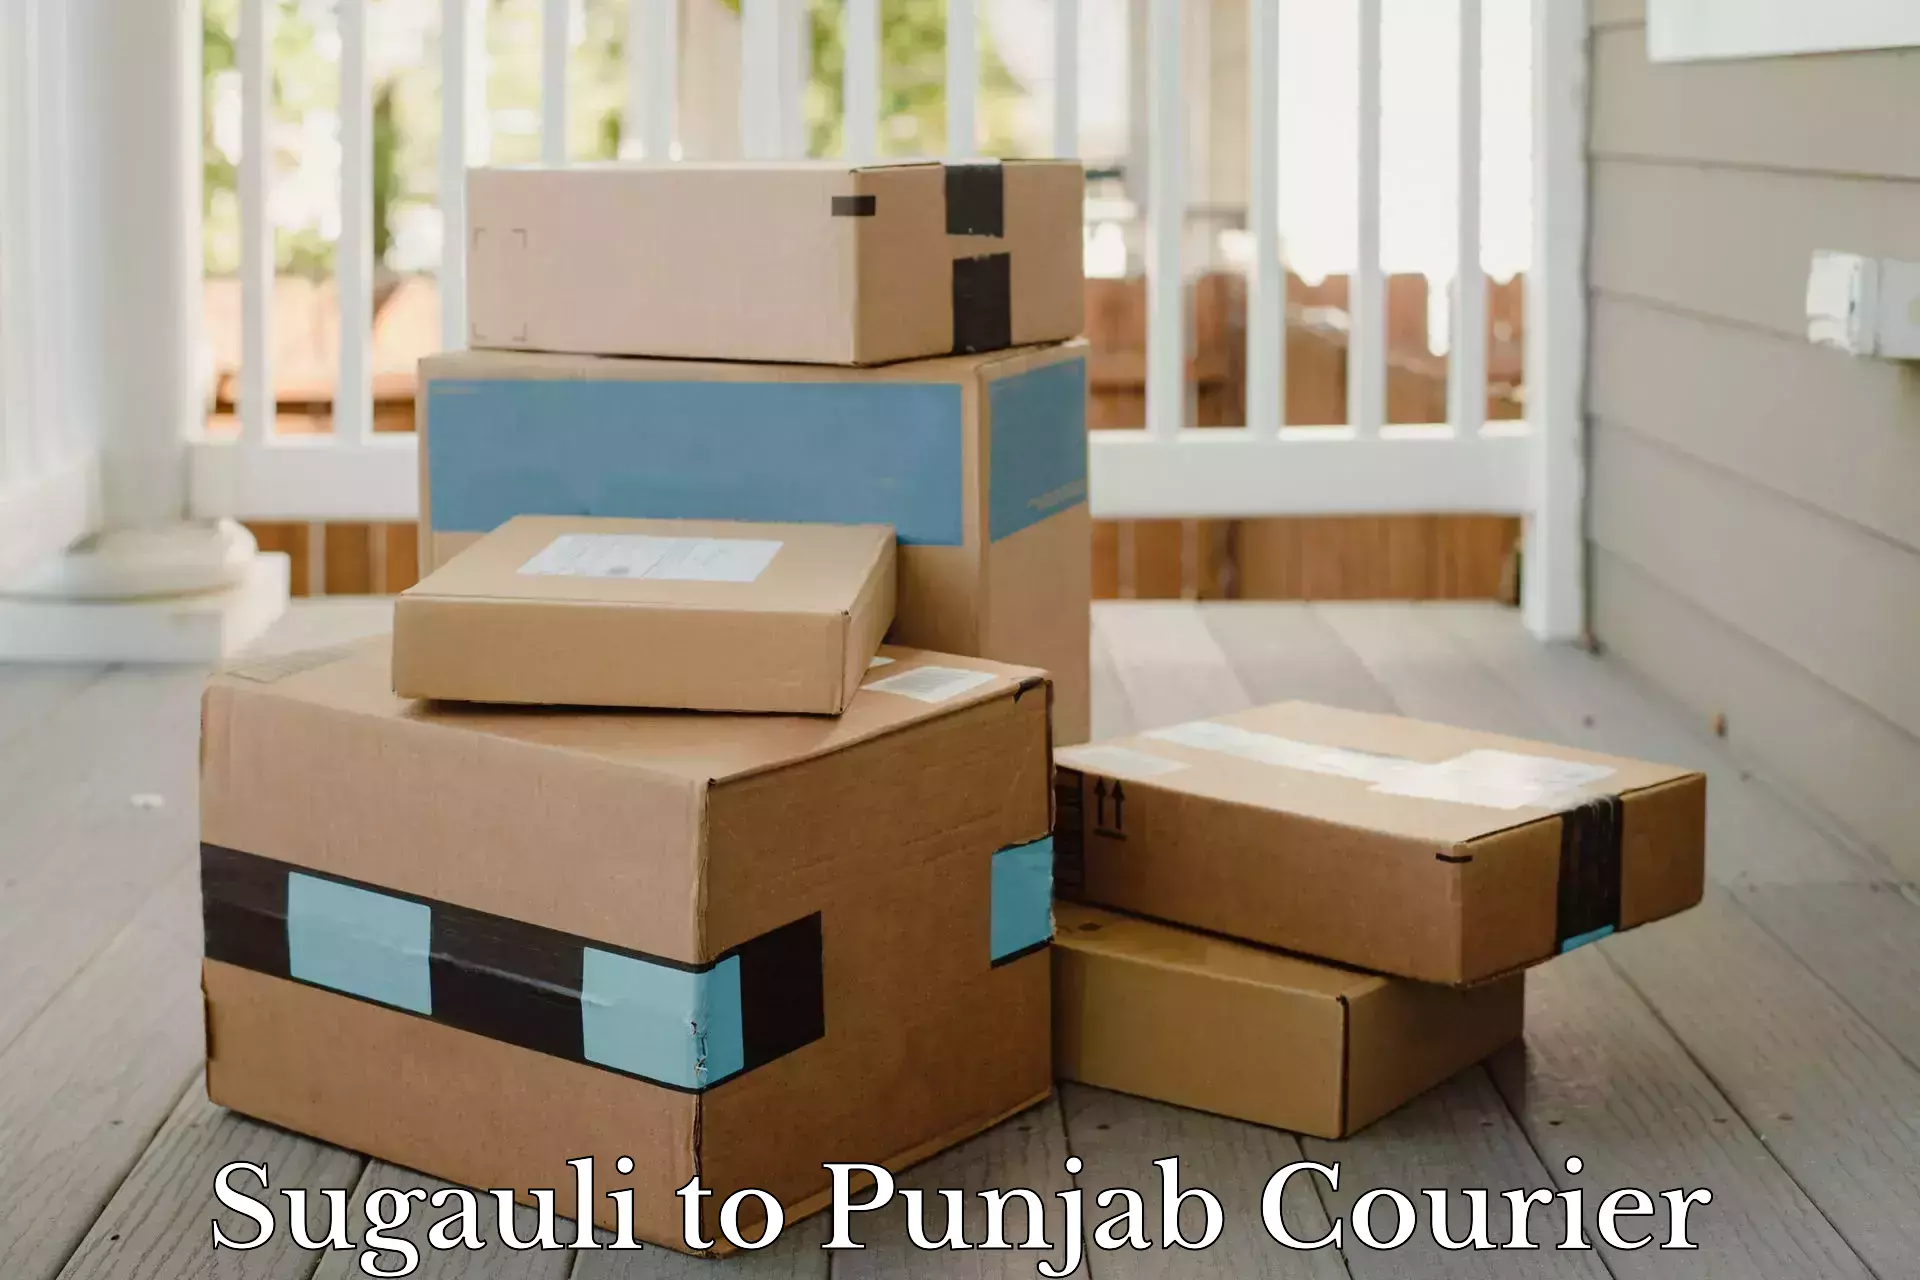 Courier service efficiency Sugauli to Amritsar